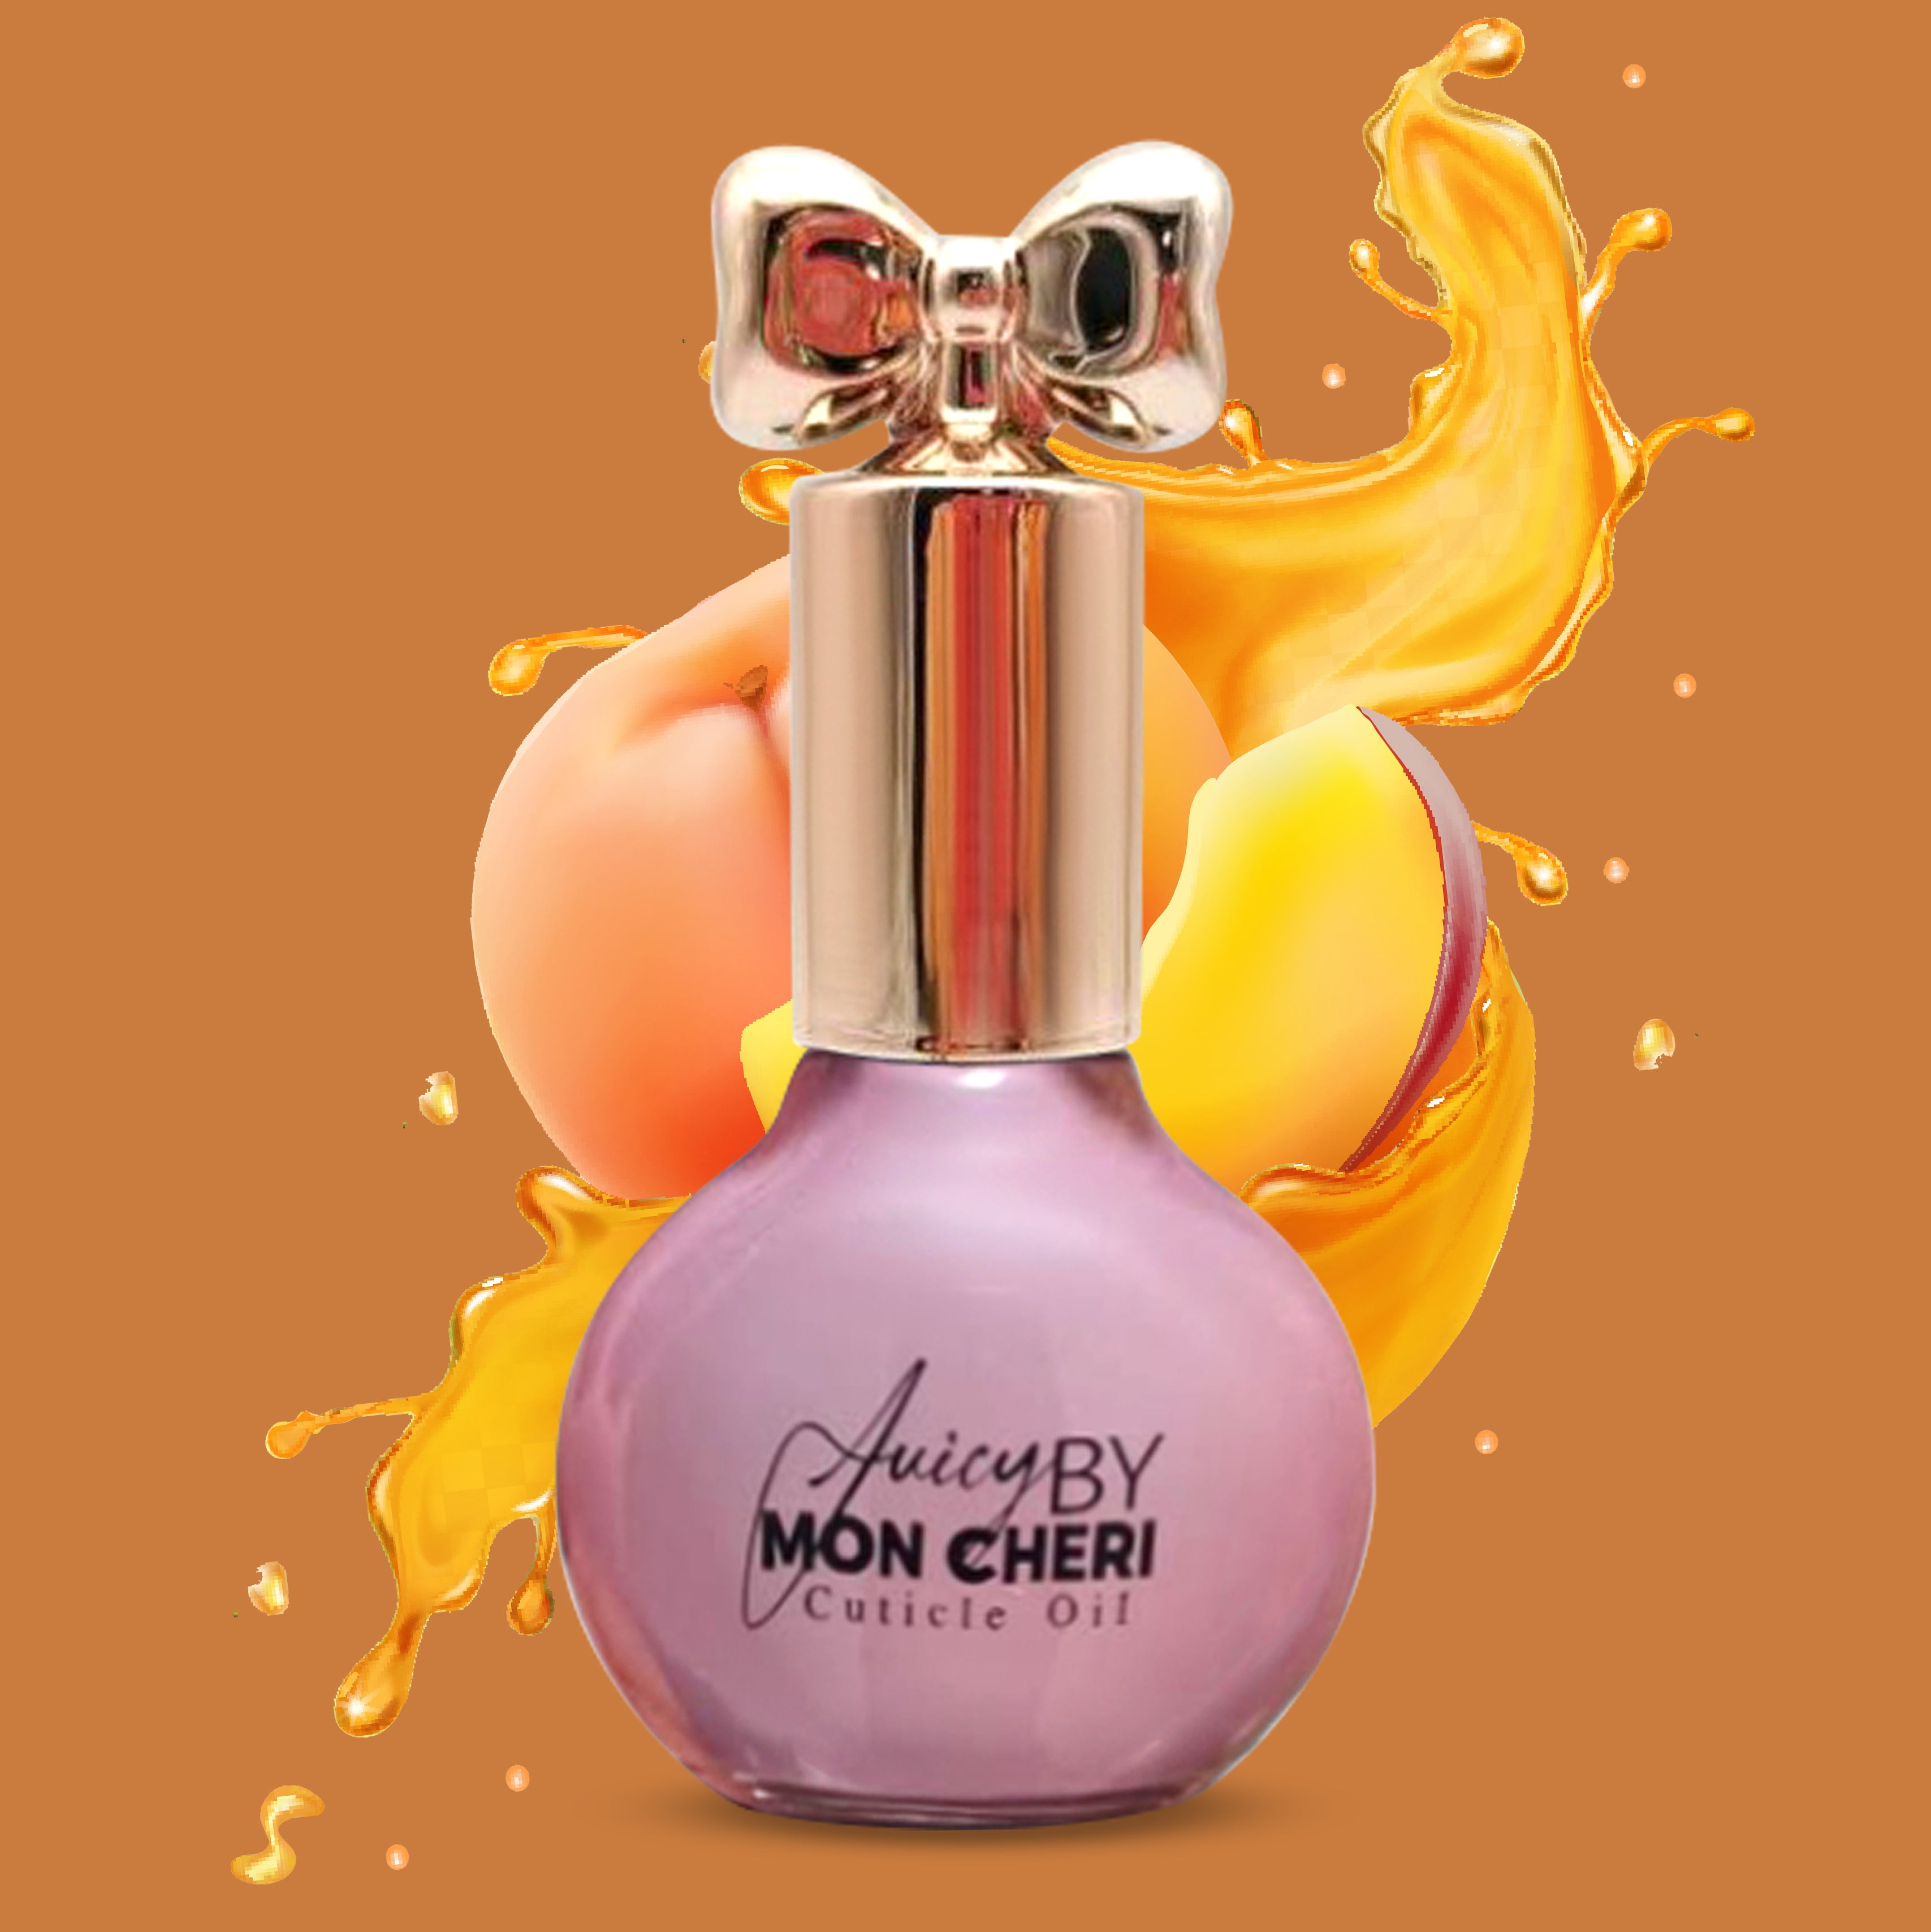 Peachy Nails: Juicy by Mon Cheri Cuticle Oil